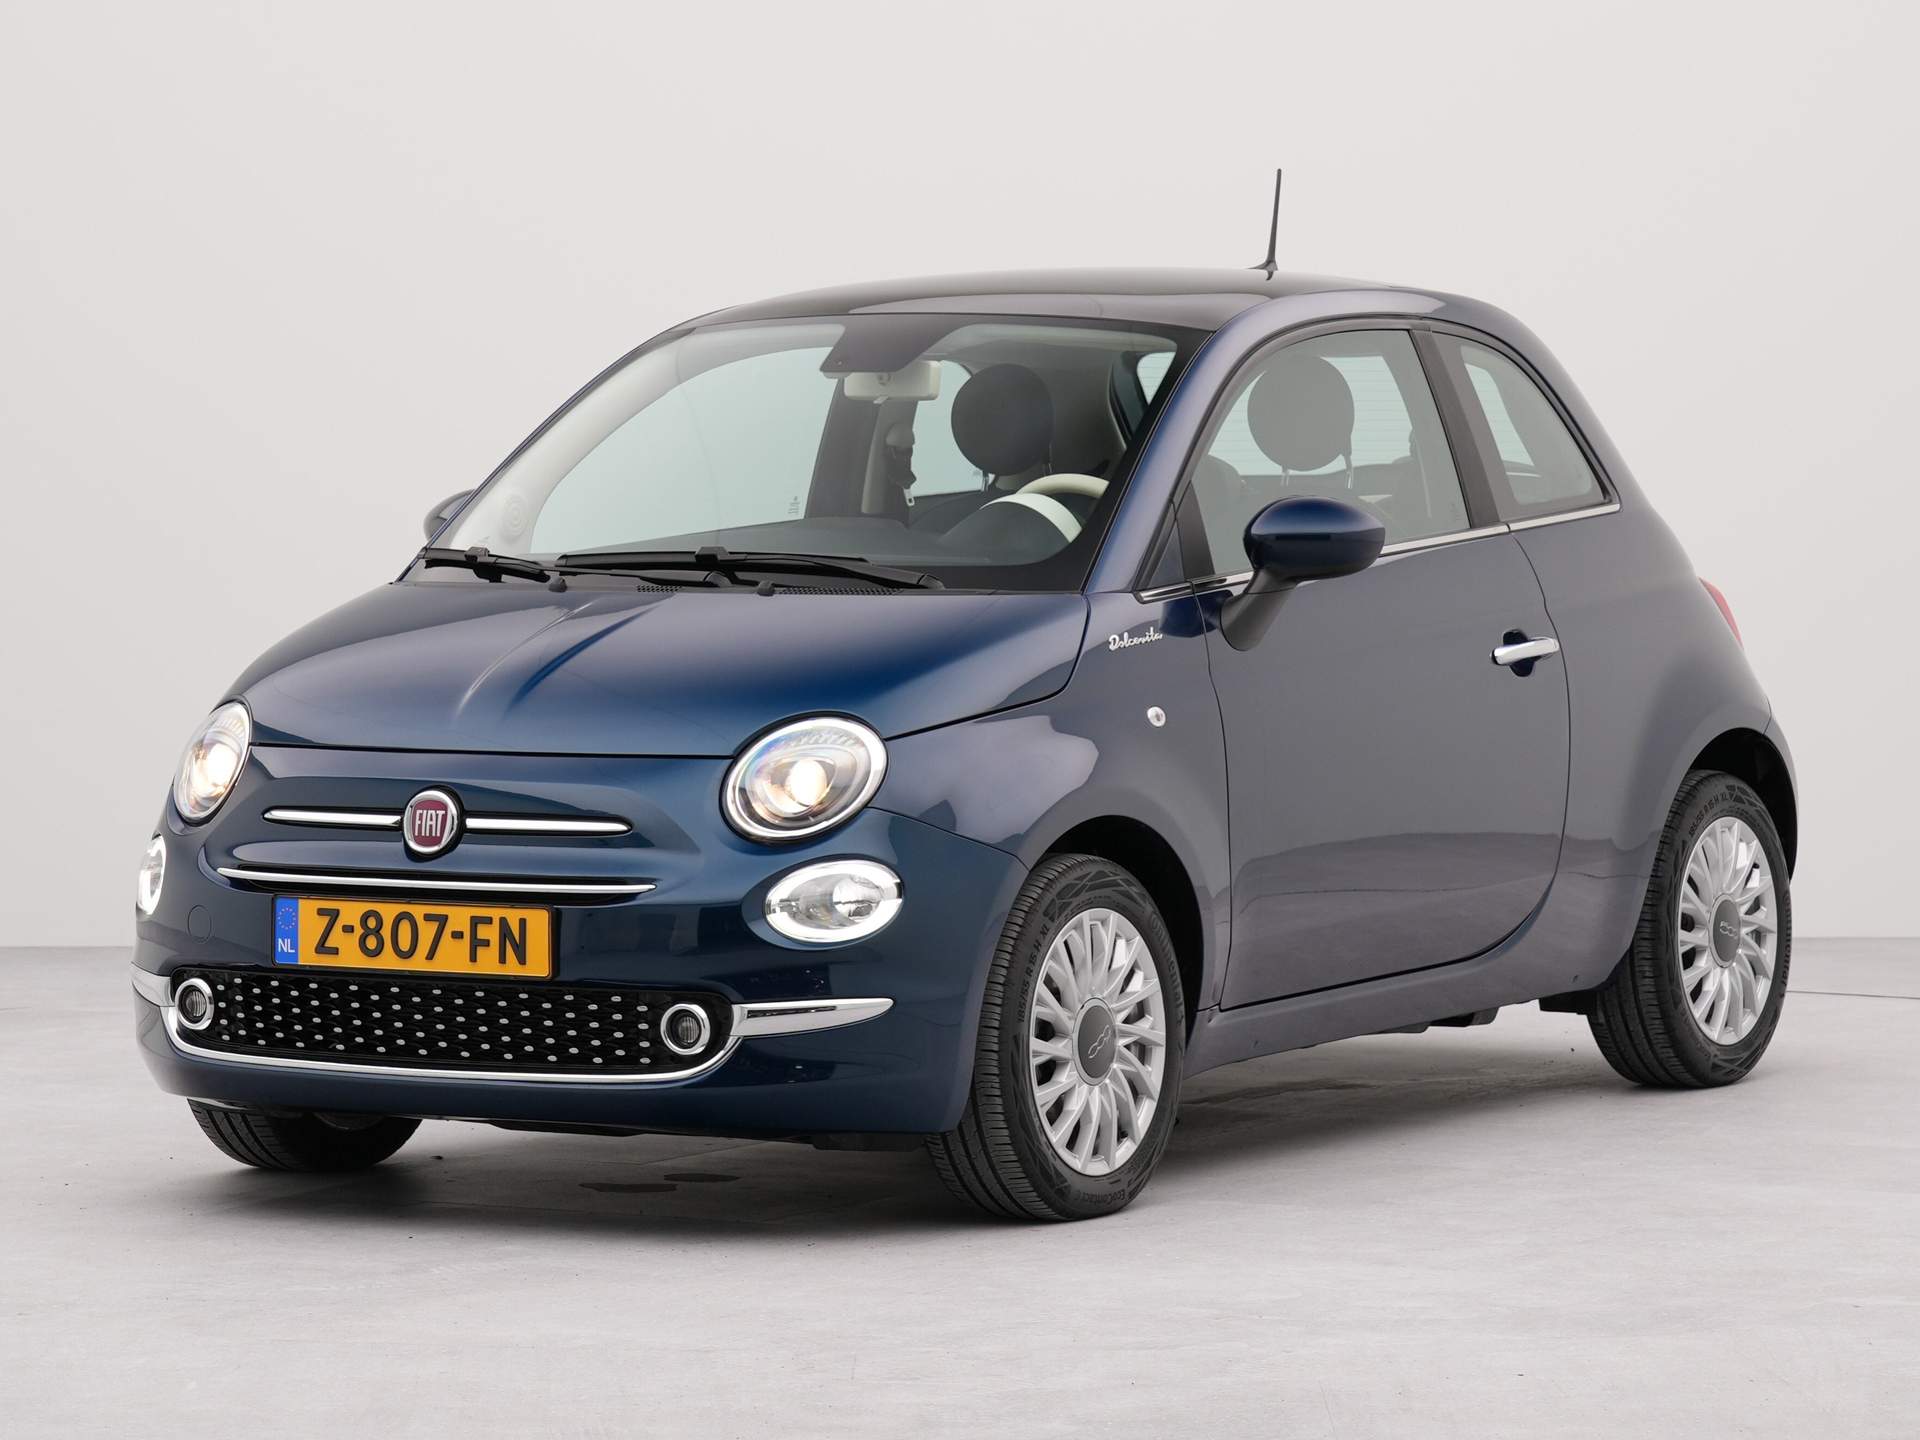 Private Lease deze Fiat 500 vanaf 379 euro per maand bij IKRIJ.nl